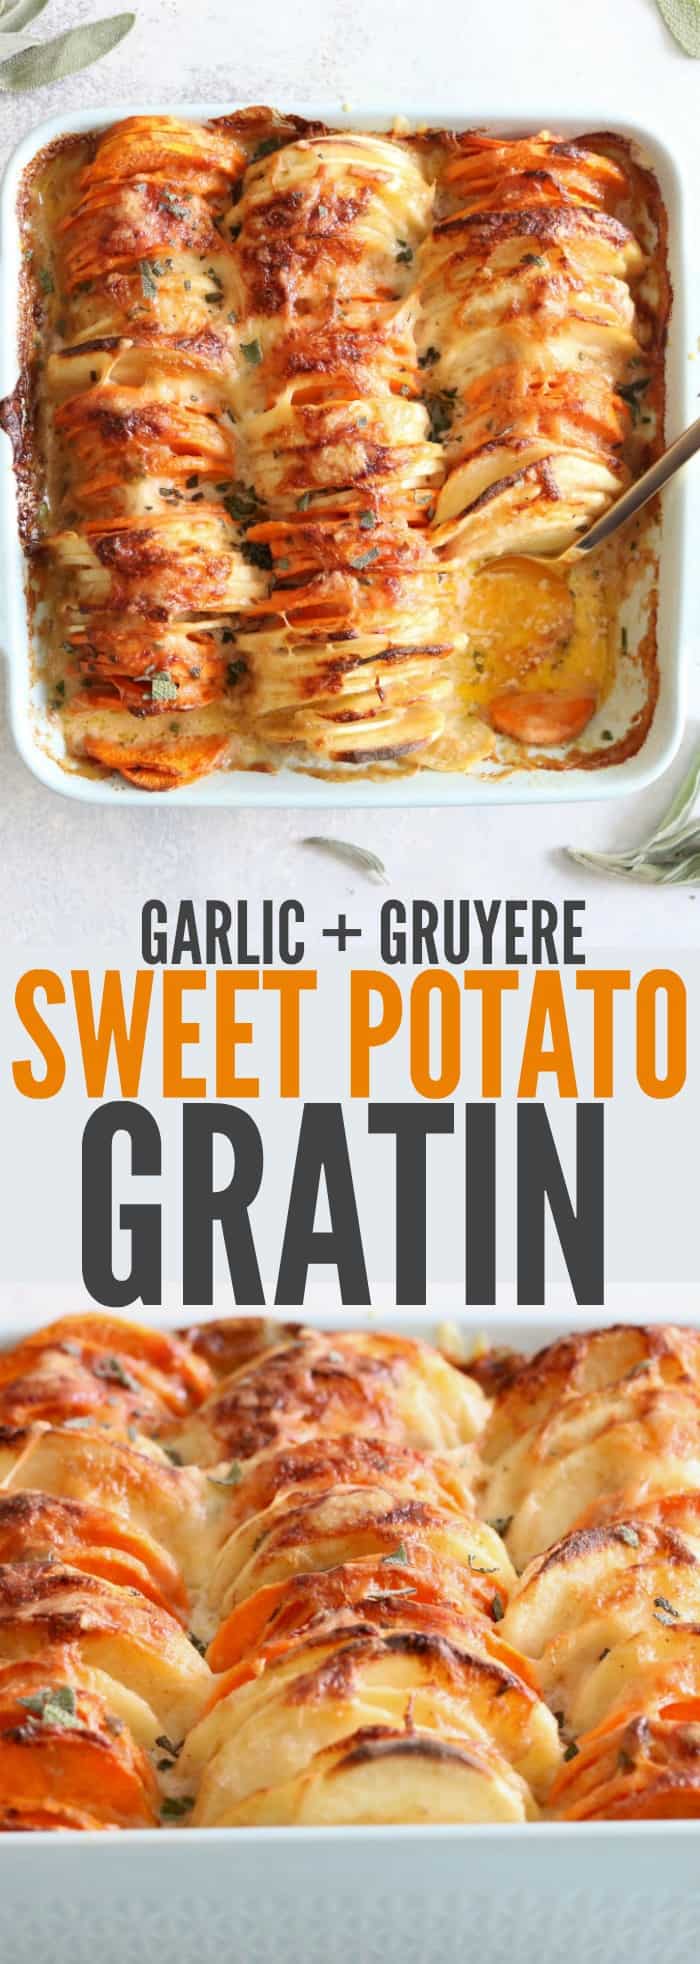 Garlic + Gruyere Sweet Potato Gratin - The Toasted Pine Nut